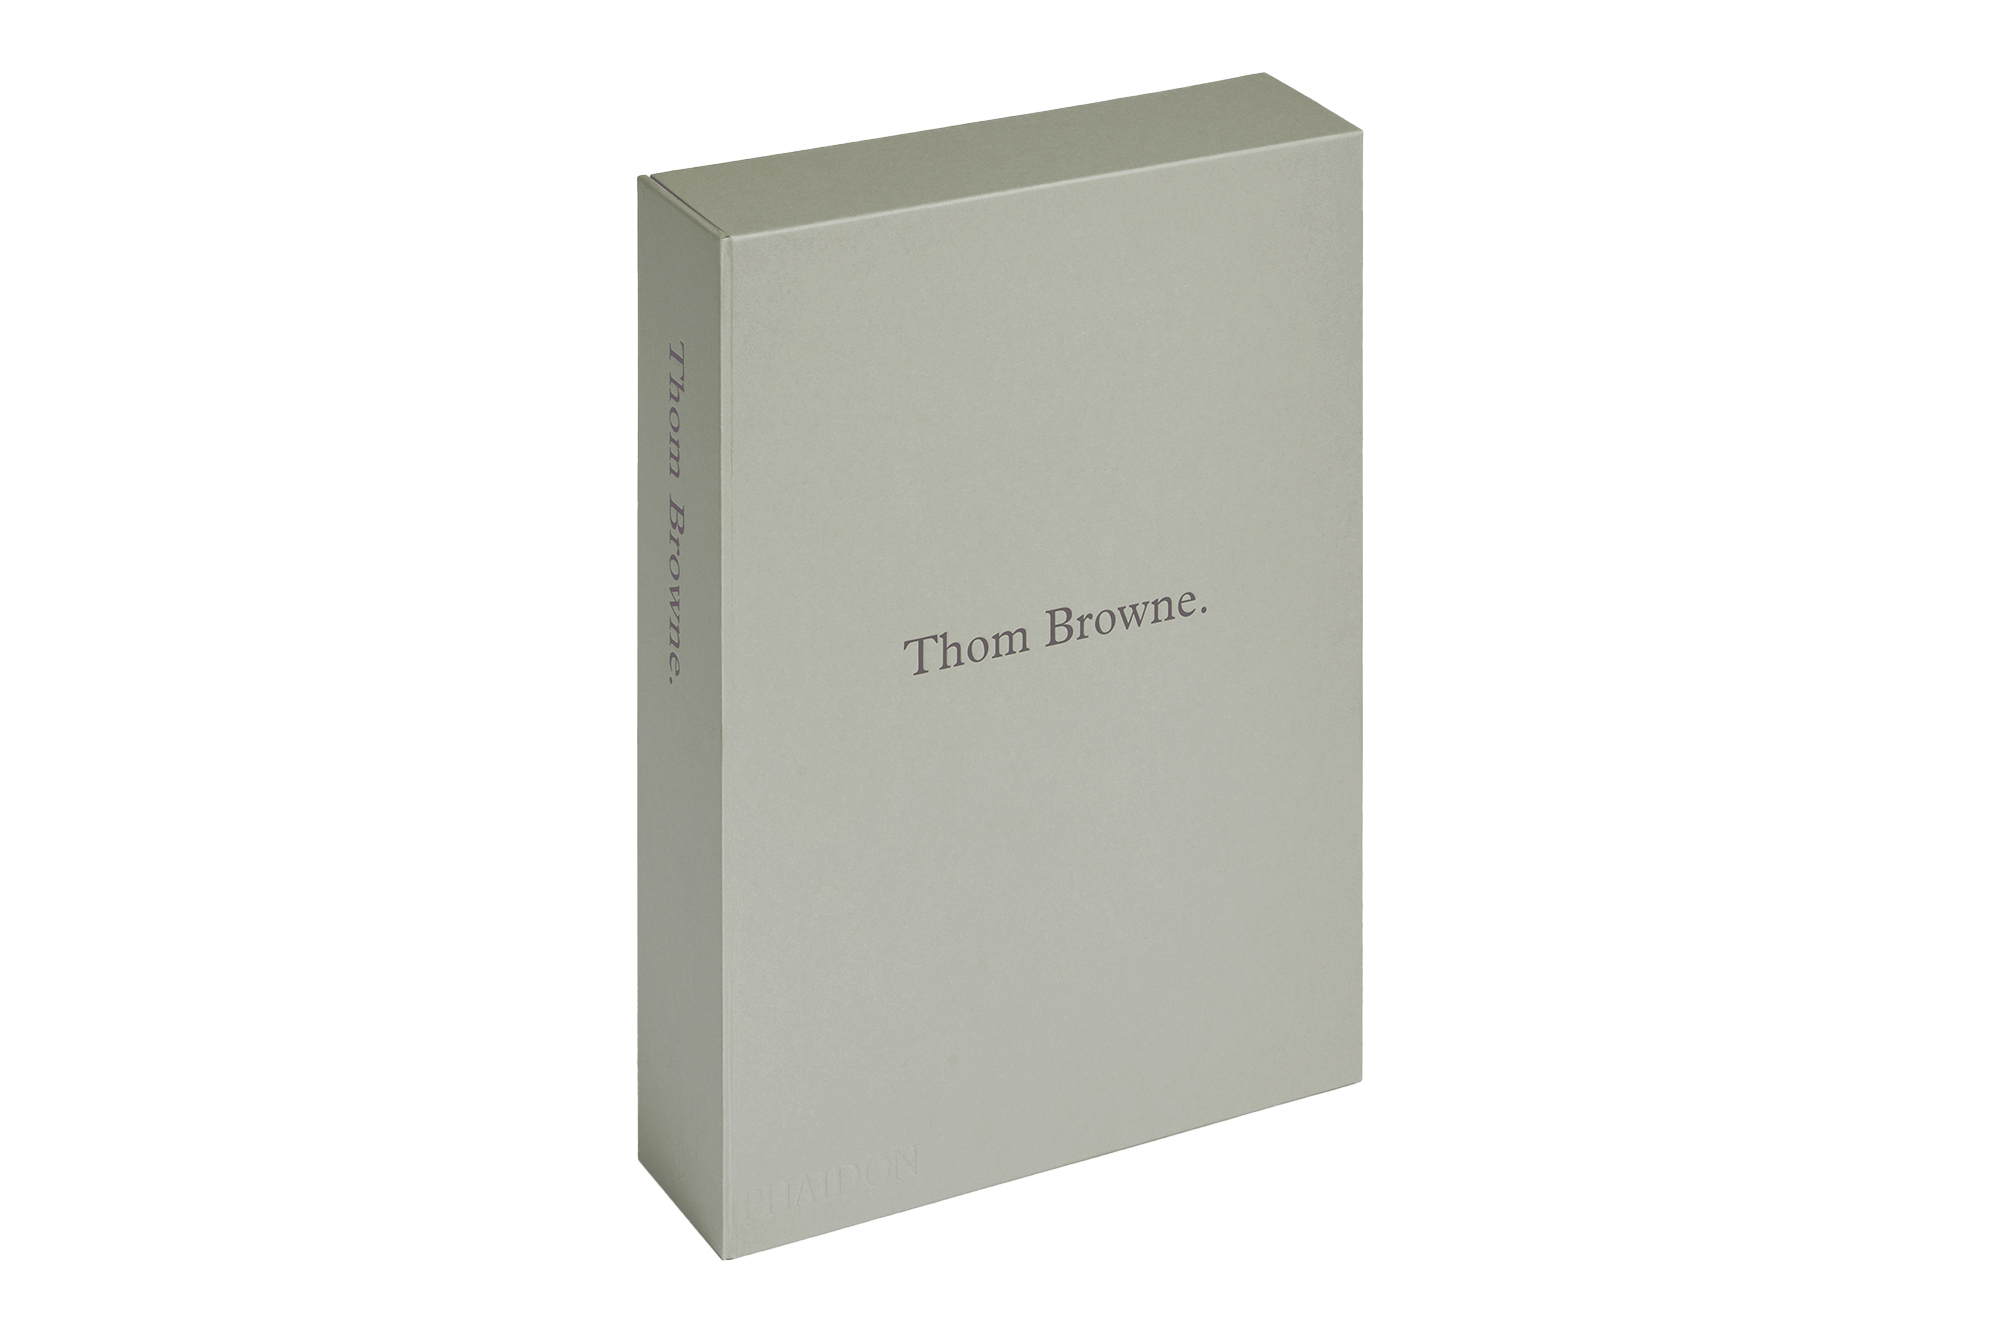 Thom Browne (Signed Edition, Phaidon)